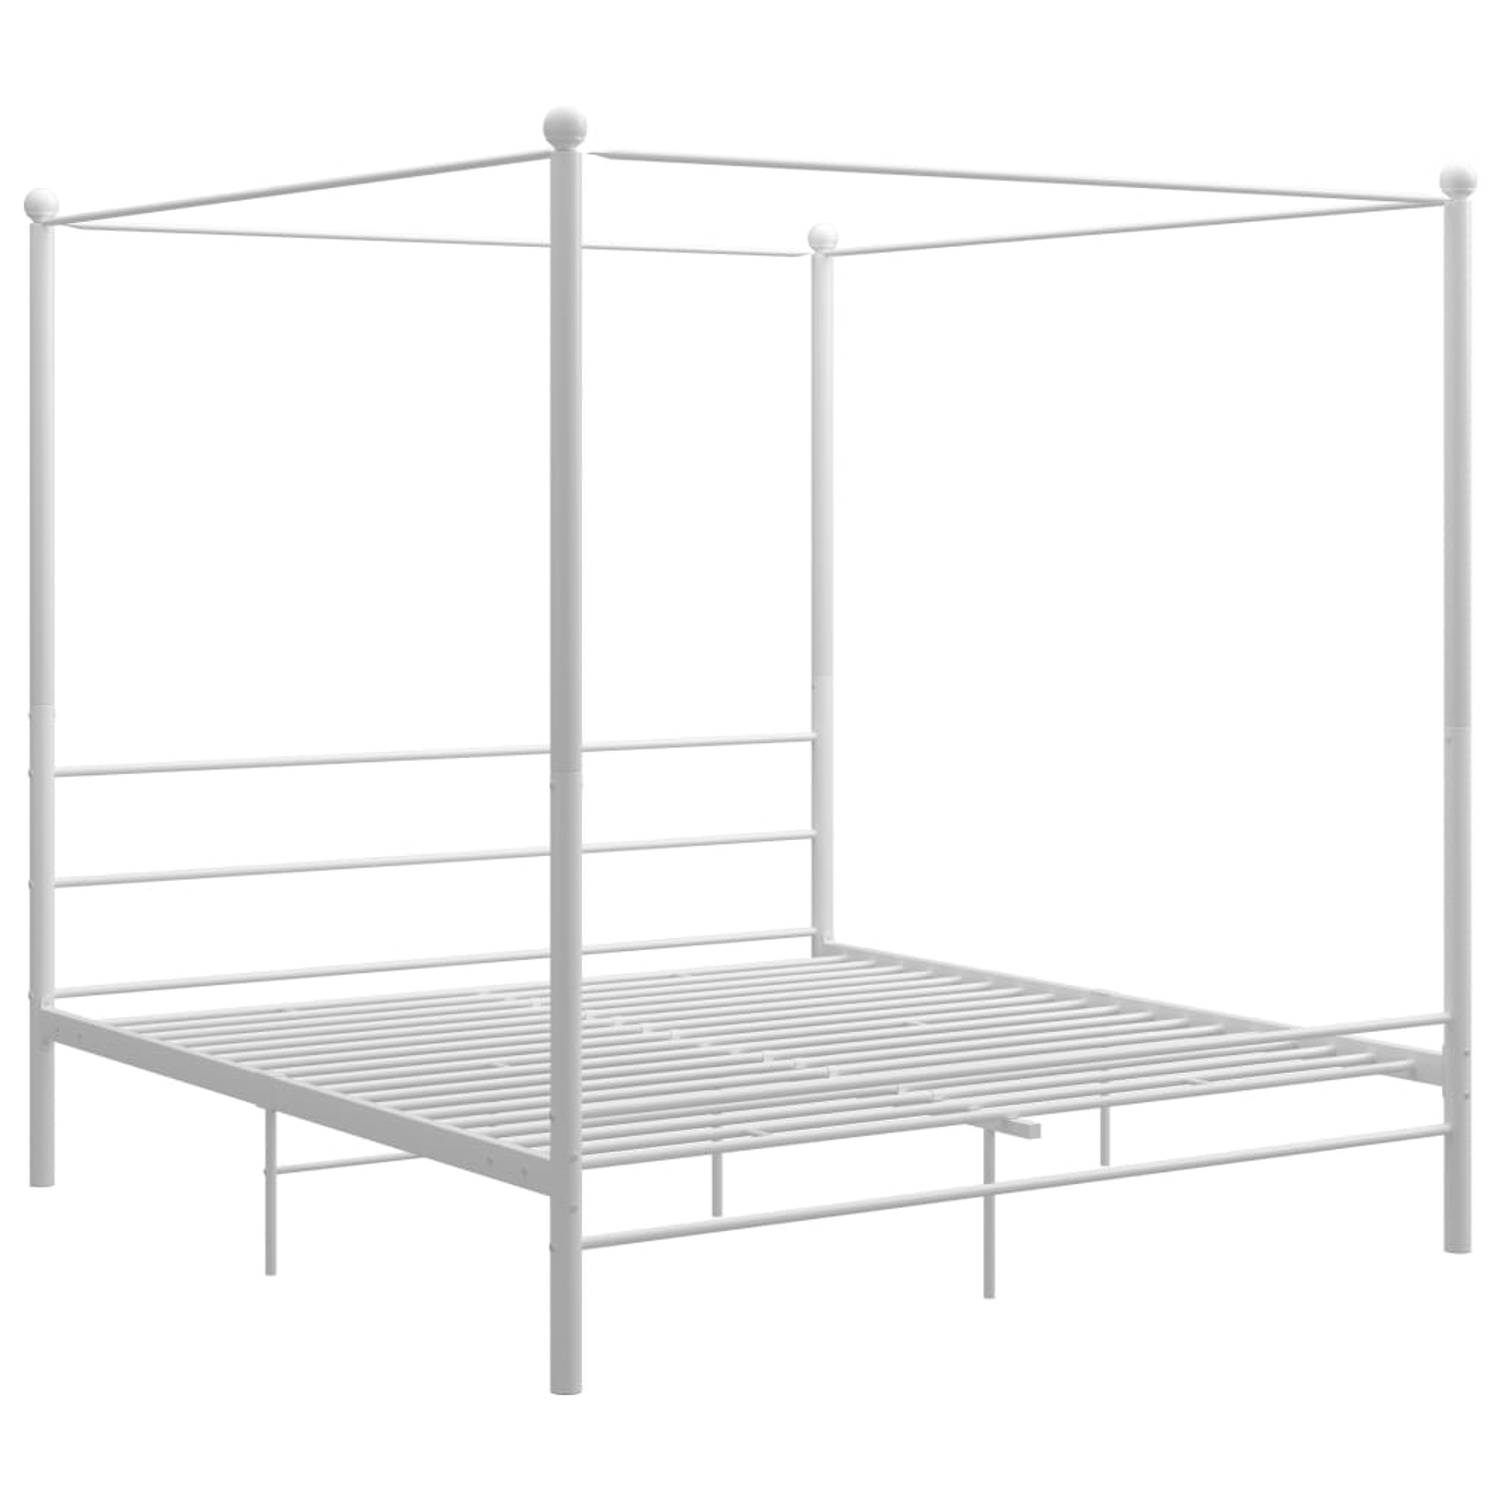 The Living Store Hemelbedframe metaal wit 200x200 cm - Bedframe - Bedframe - Bed Frame - Bed Frames - Bed - Bedden - Metalen Bedframe - Metalen Bedframes - 2-persoonsbed - 2